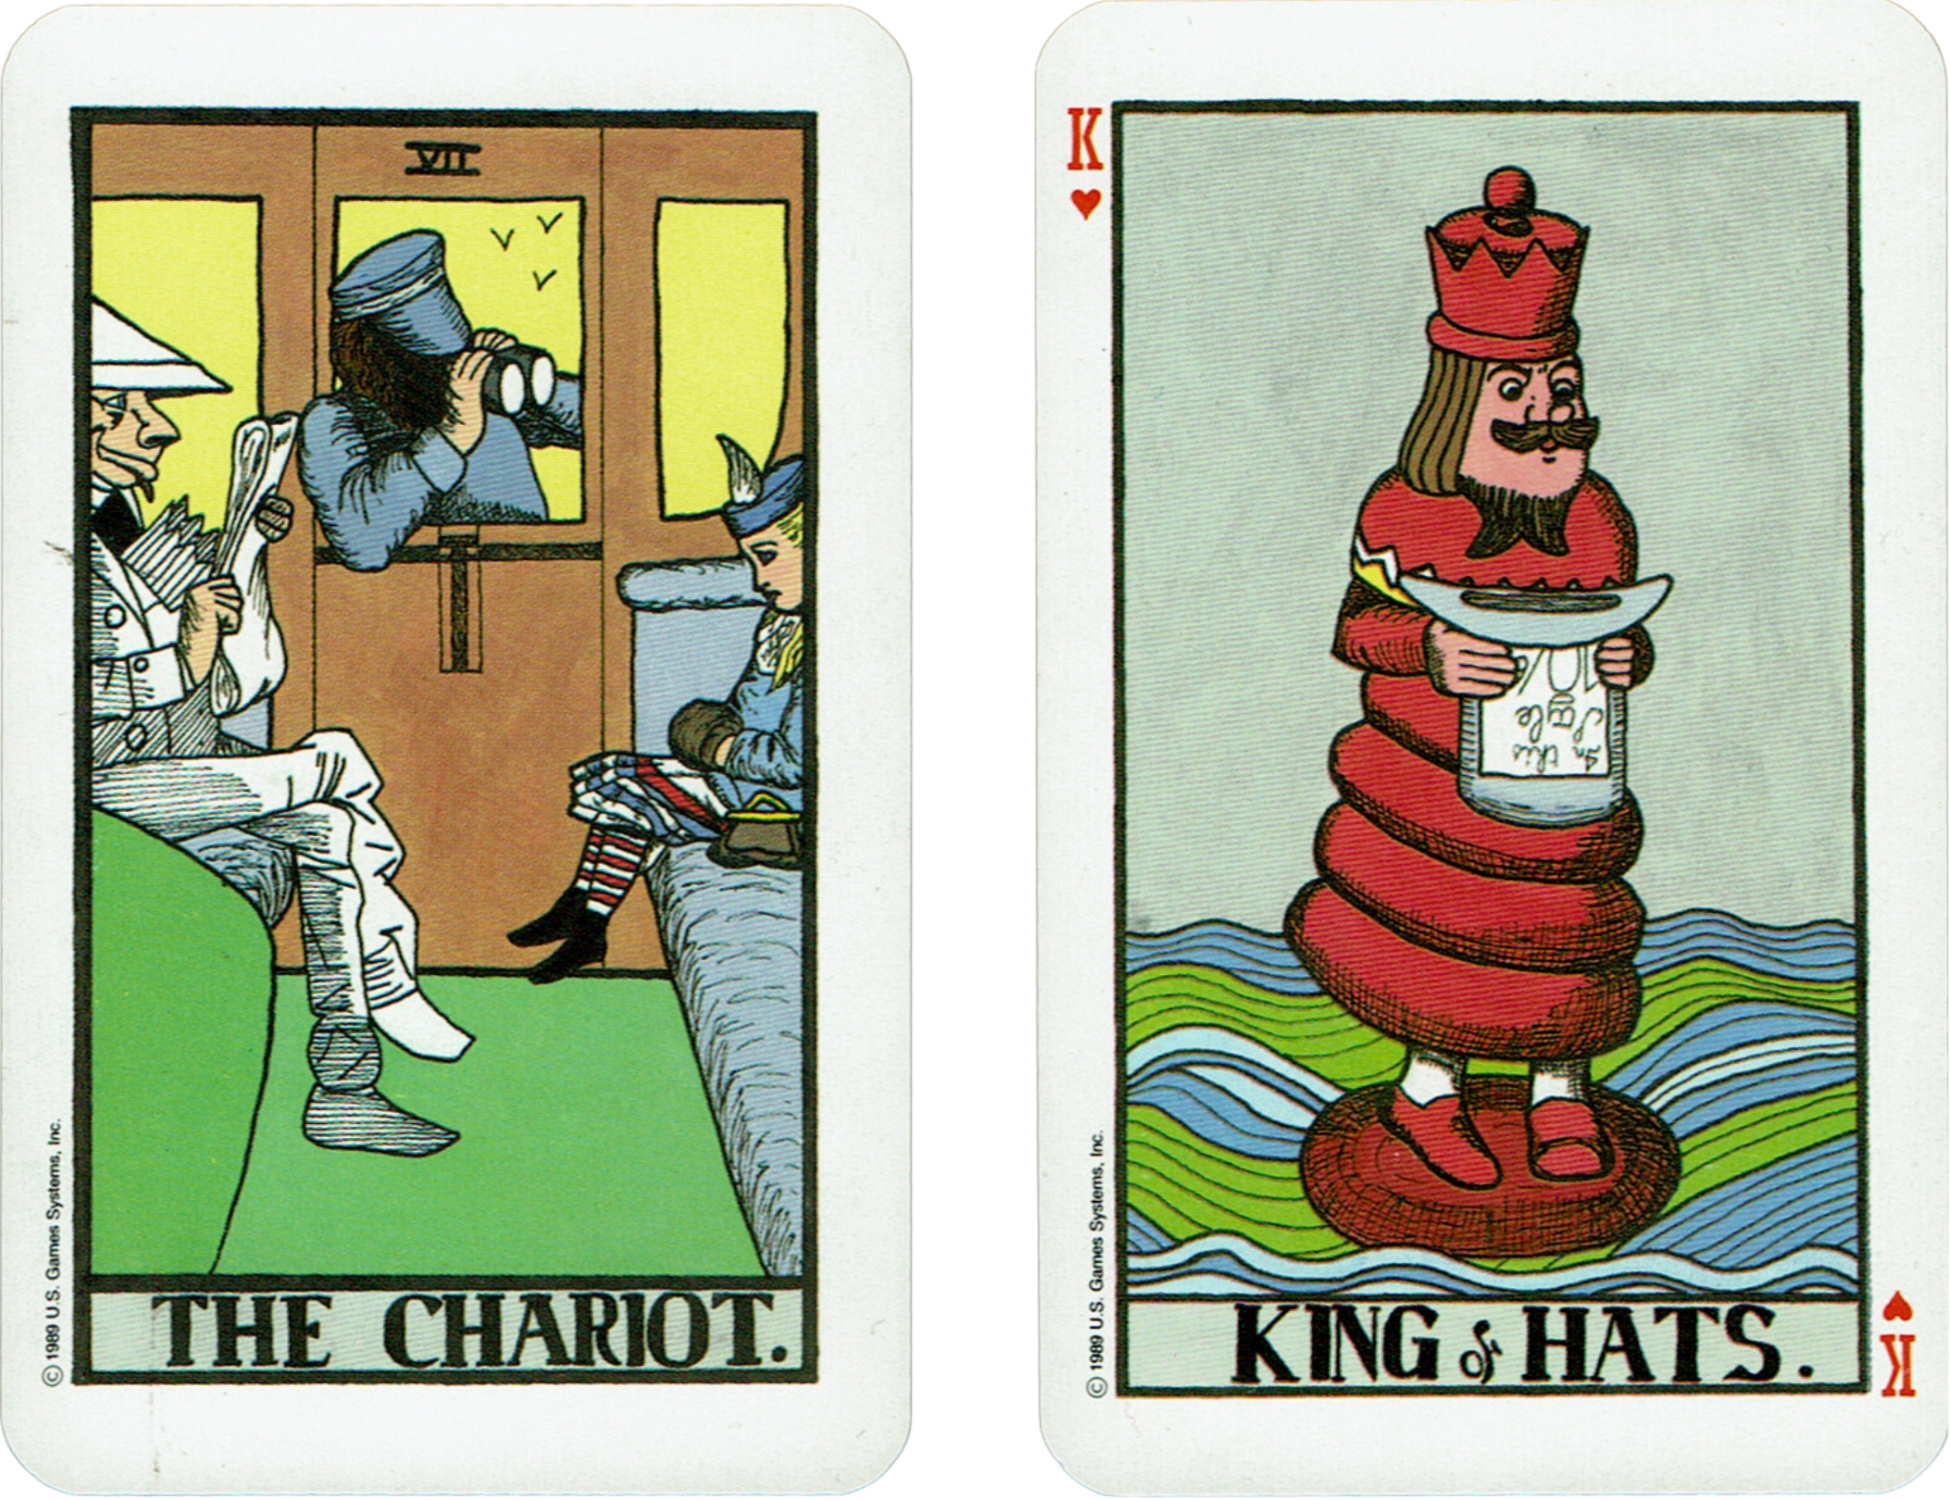 U.S. Games Systems, Inc. > Tarot & Inspiration > The Wonderland Tarot in a  Tin